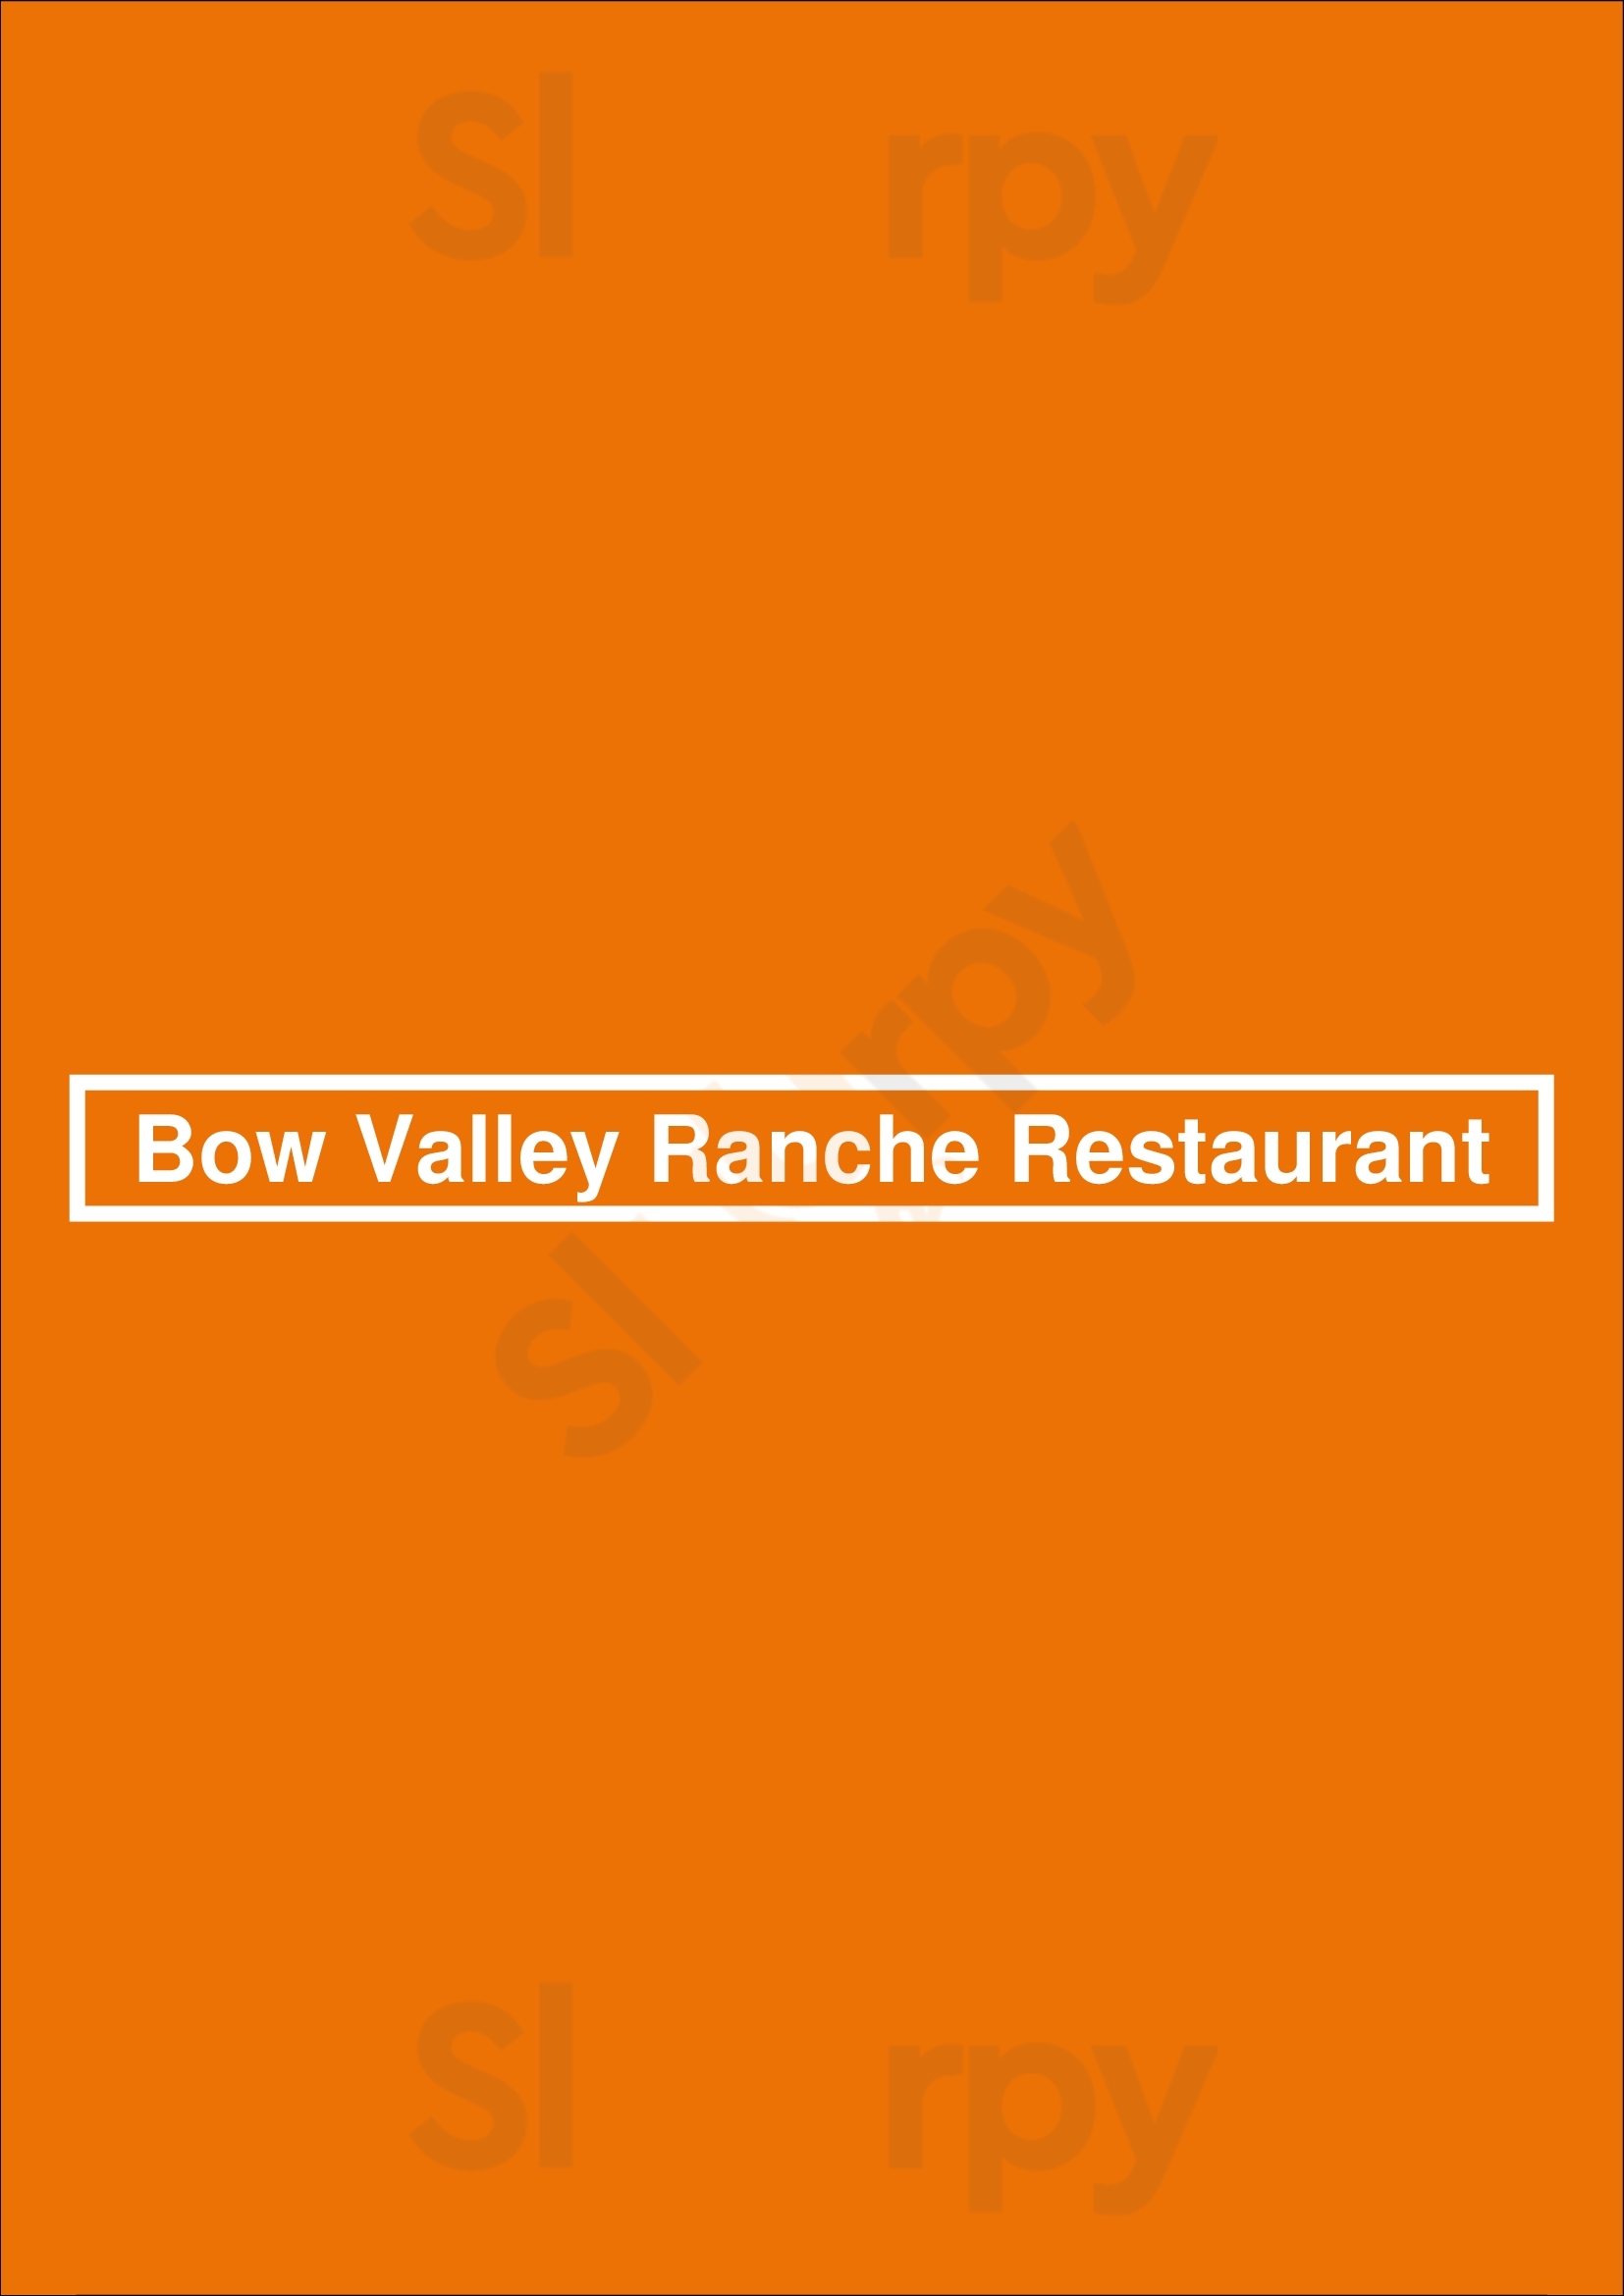 Bow Valley Ranche Restaurant Calgary Menu - 1